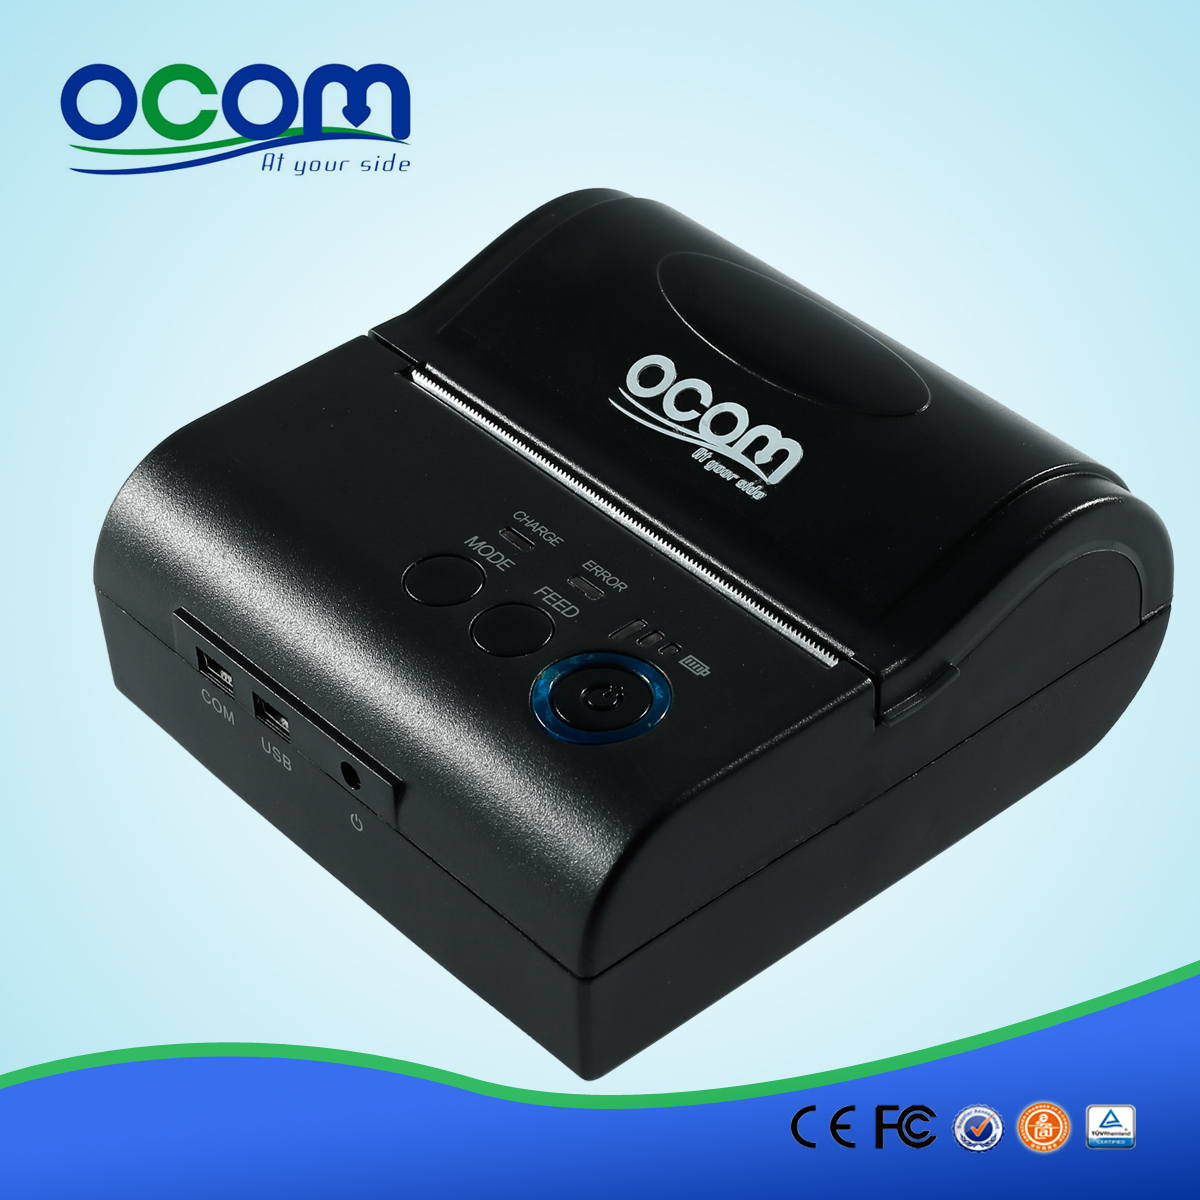 OCPP-M082: OCOM Hot vender barato 80 milímetros impressora bluetooth, 80 milímetros impressora Bluetooth